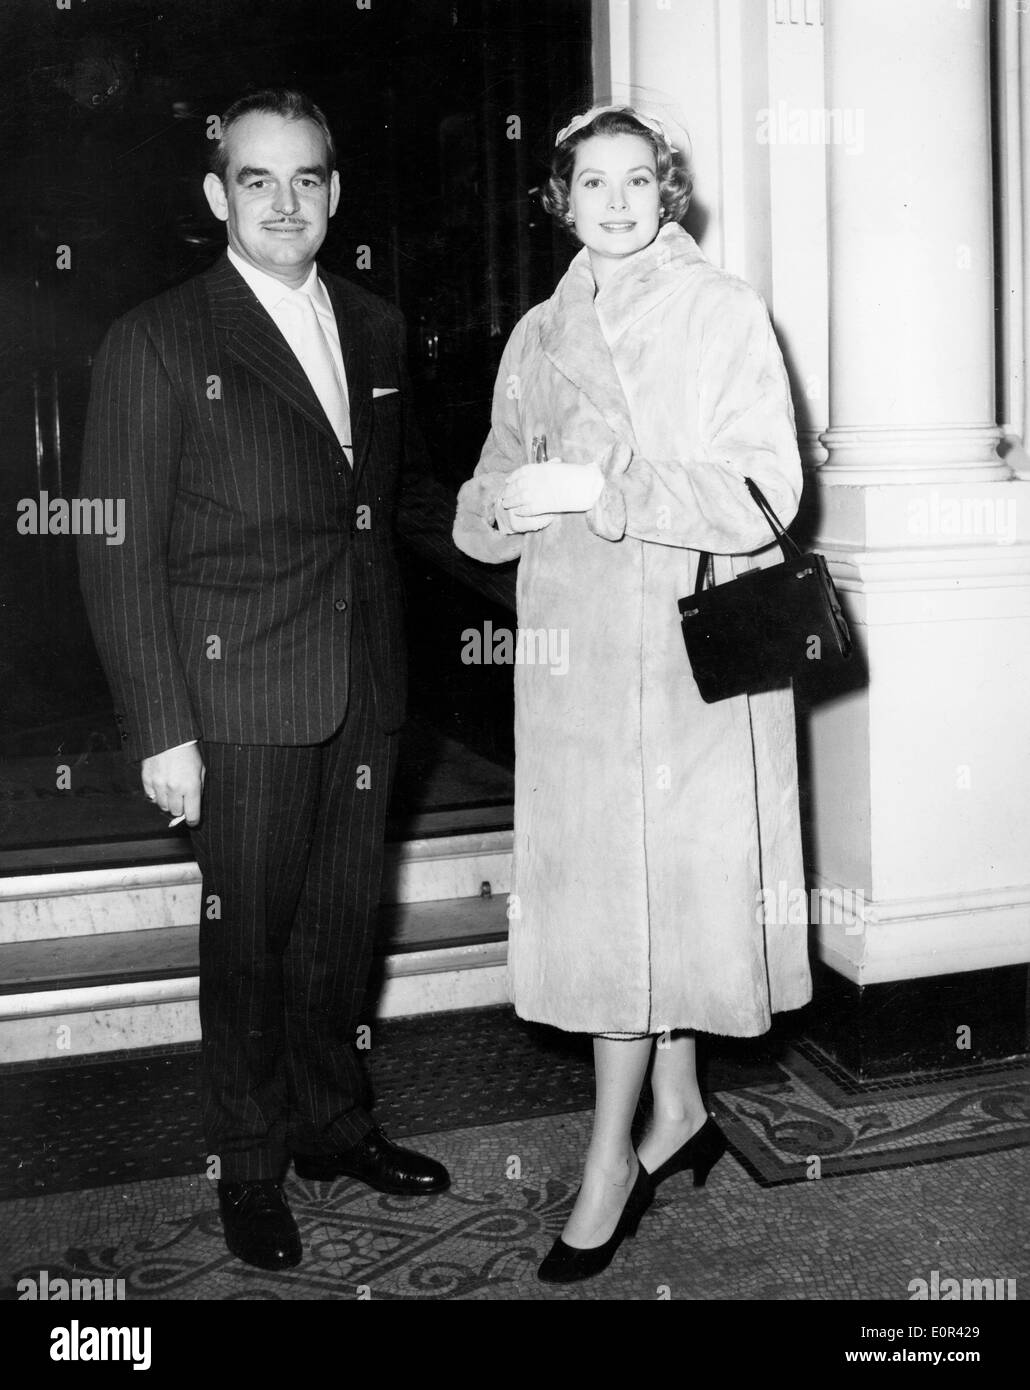 Fürst Rainier mit Frau Grace Kelly Buckingham Palace besuchen  Stockfotografie - Alamy